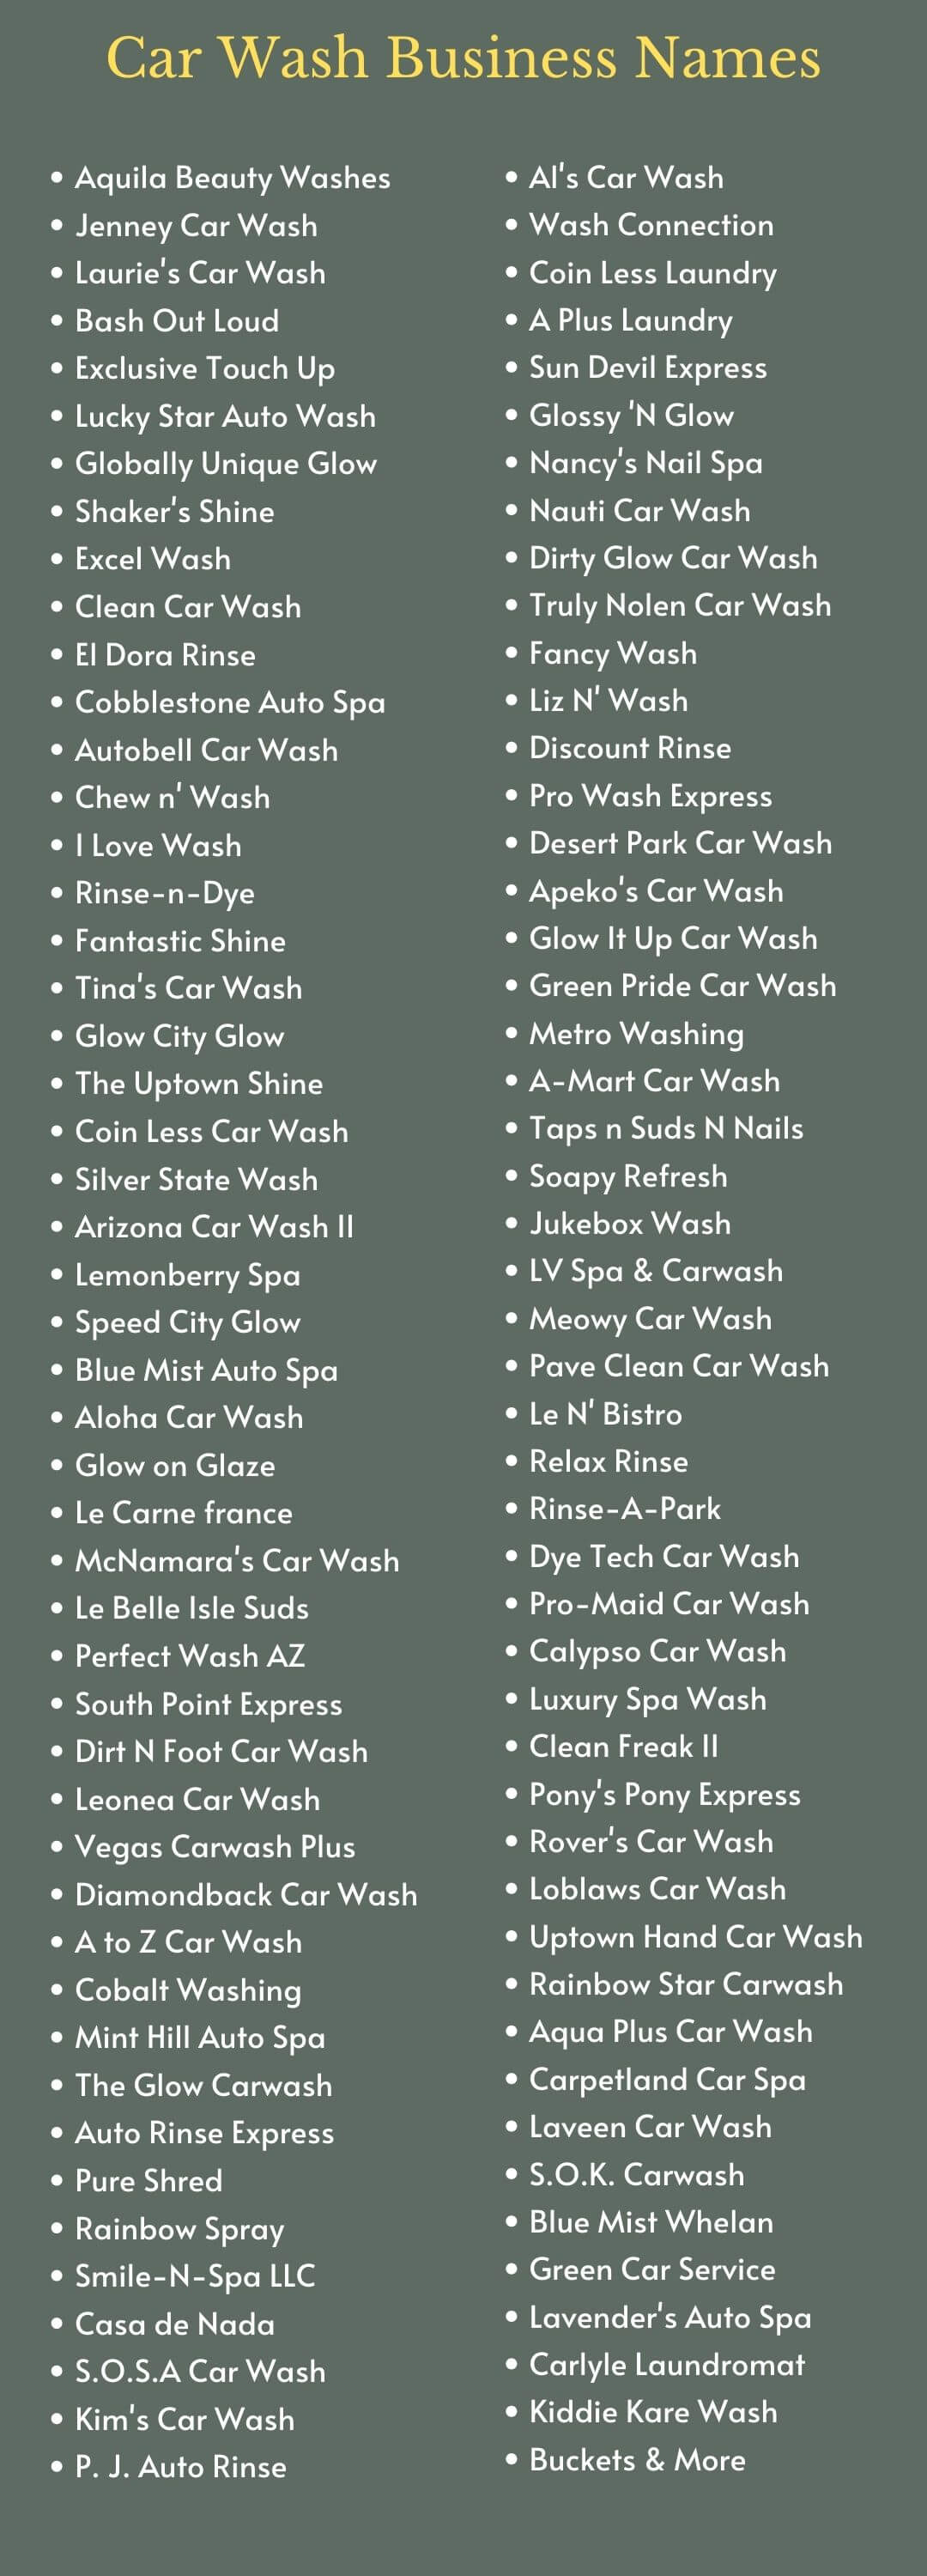 Car Wash Business Names